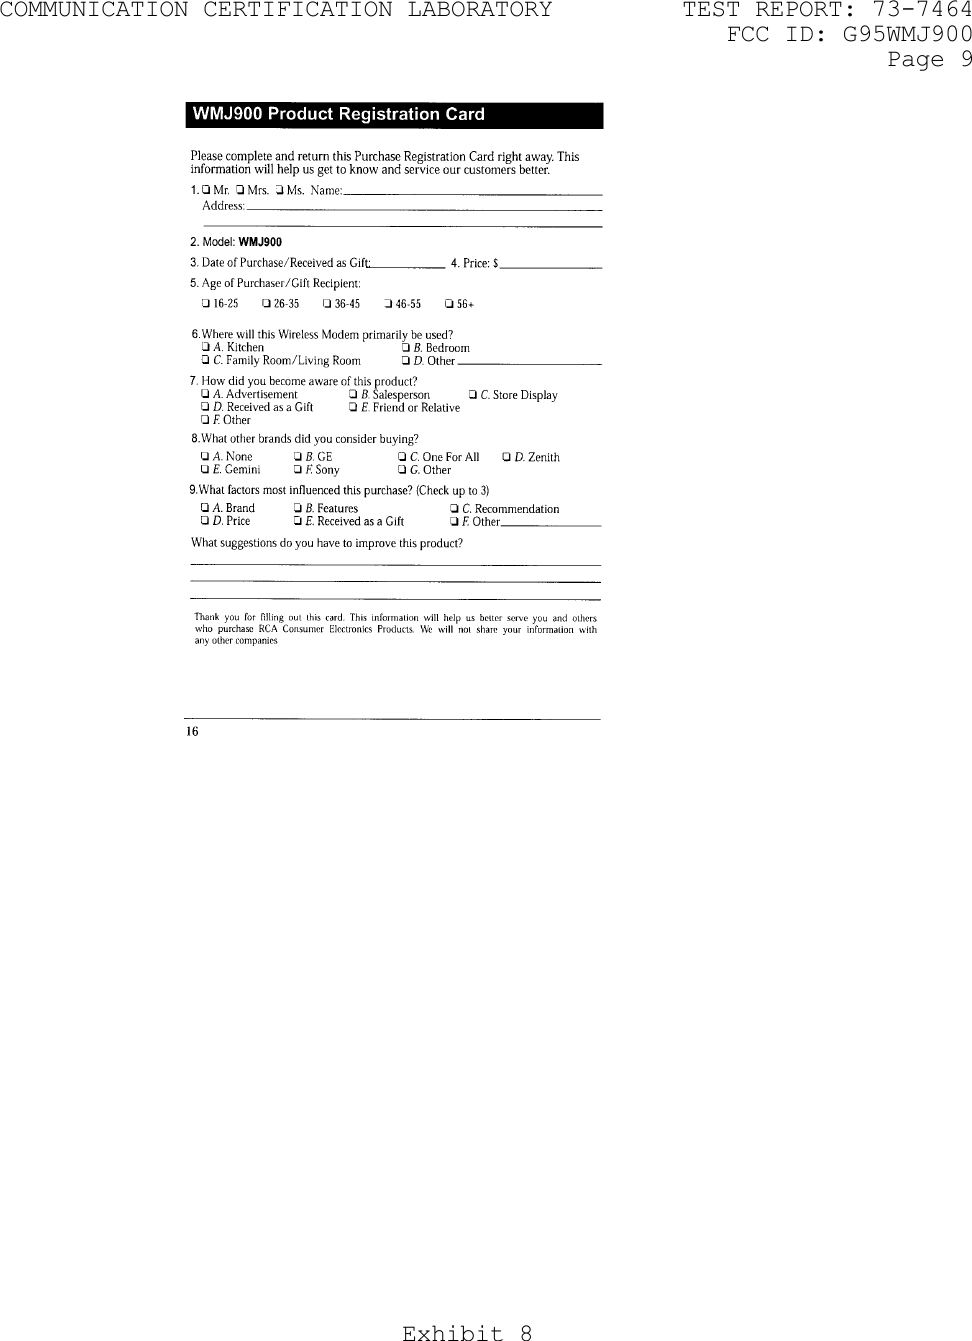 COMMUNICATION CERTIFICATION LABORATORY  TEST REPORT: 73-7464     FCC ID: G95WMJ900   Page 9 Exhibit 8    